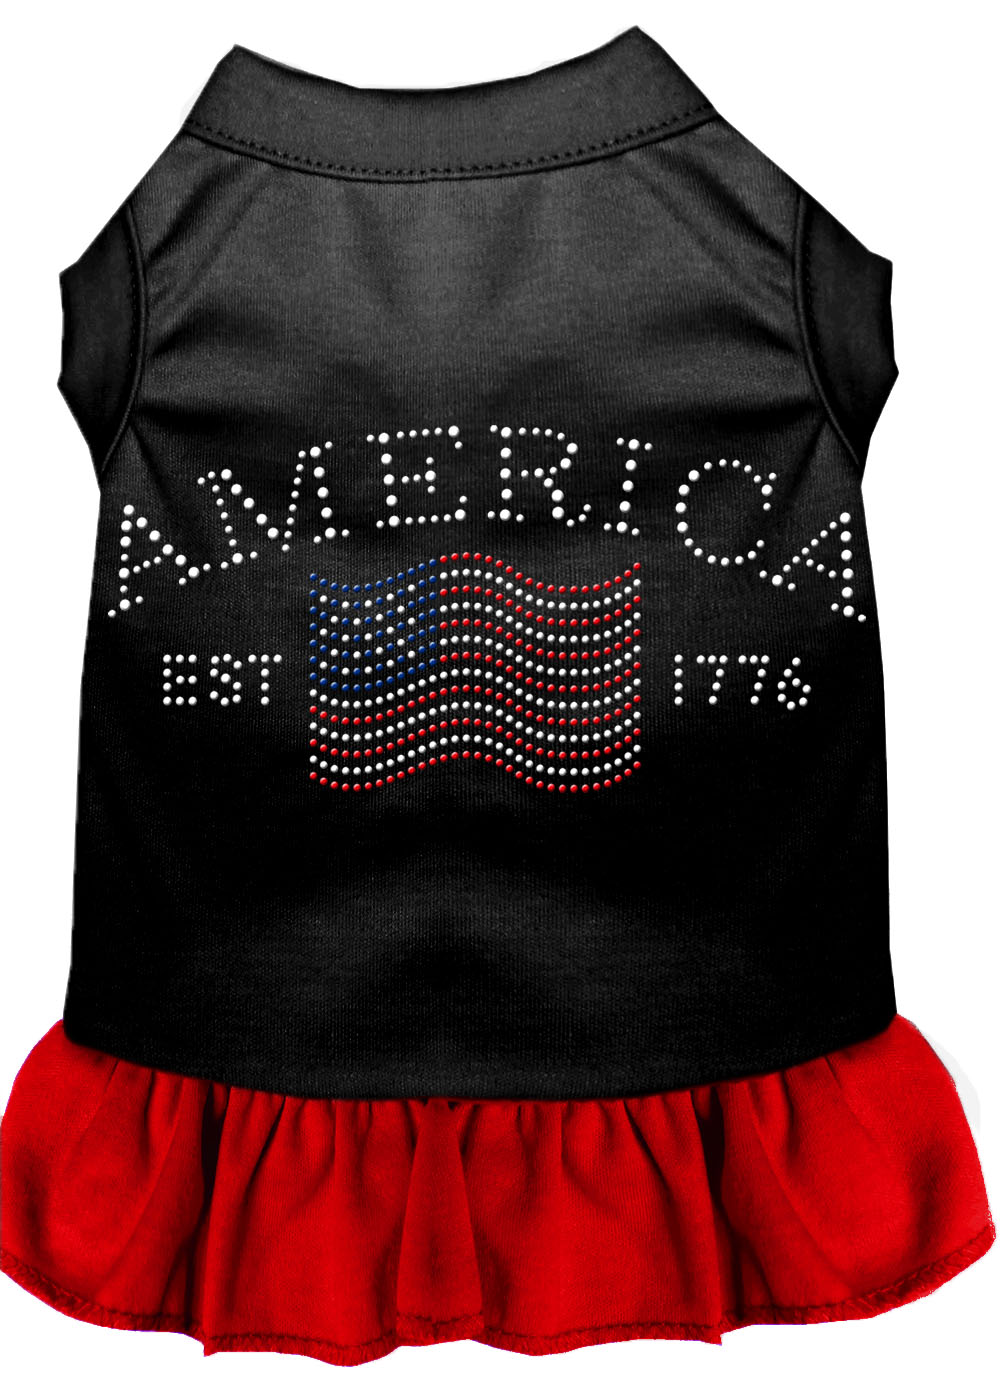 Classic America Rhinestone Dress Black with Red XL